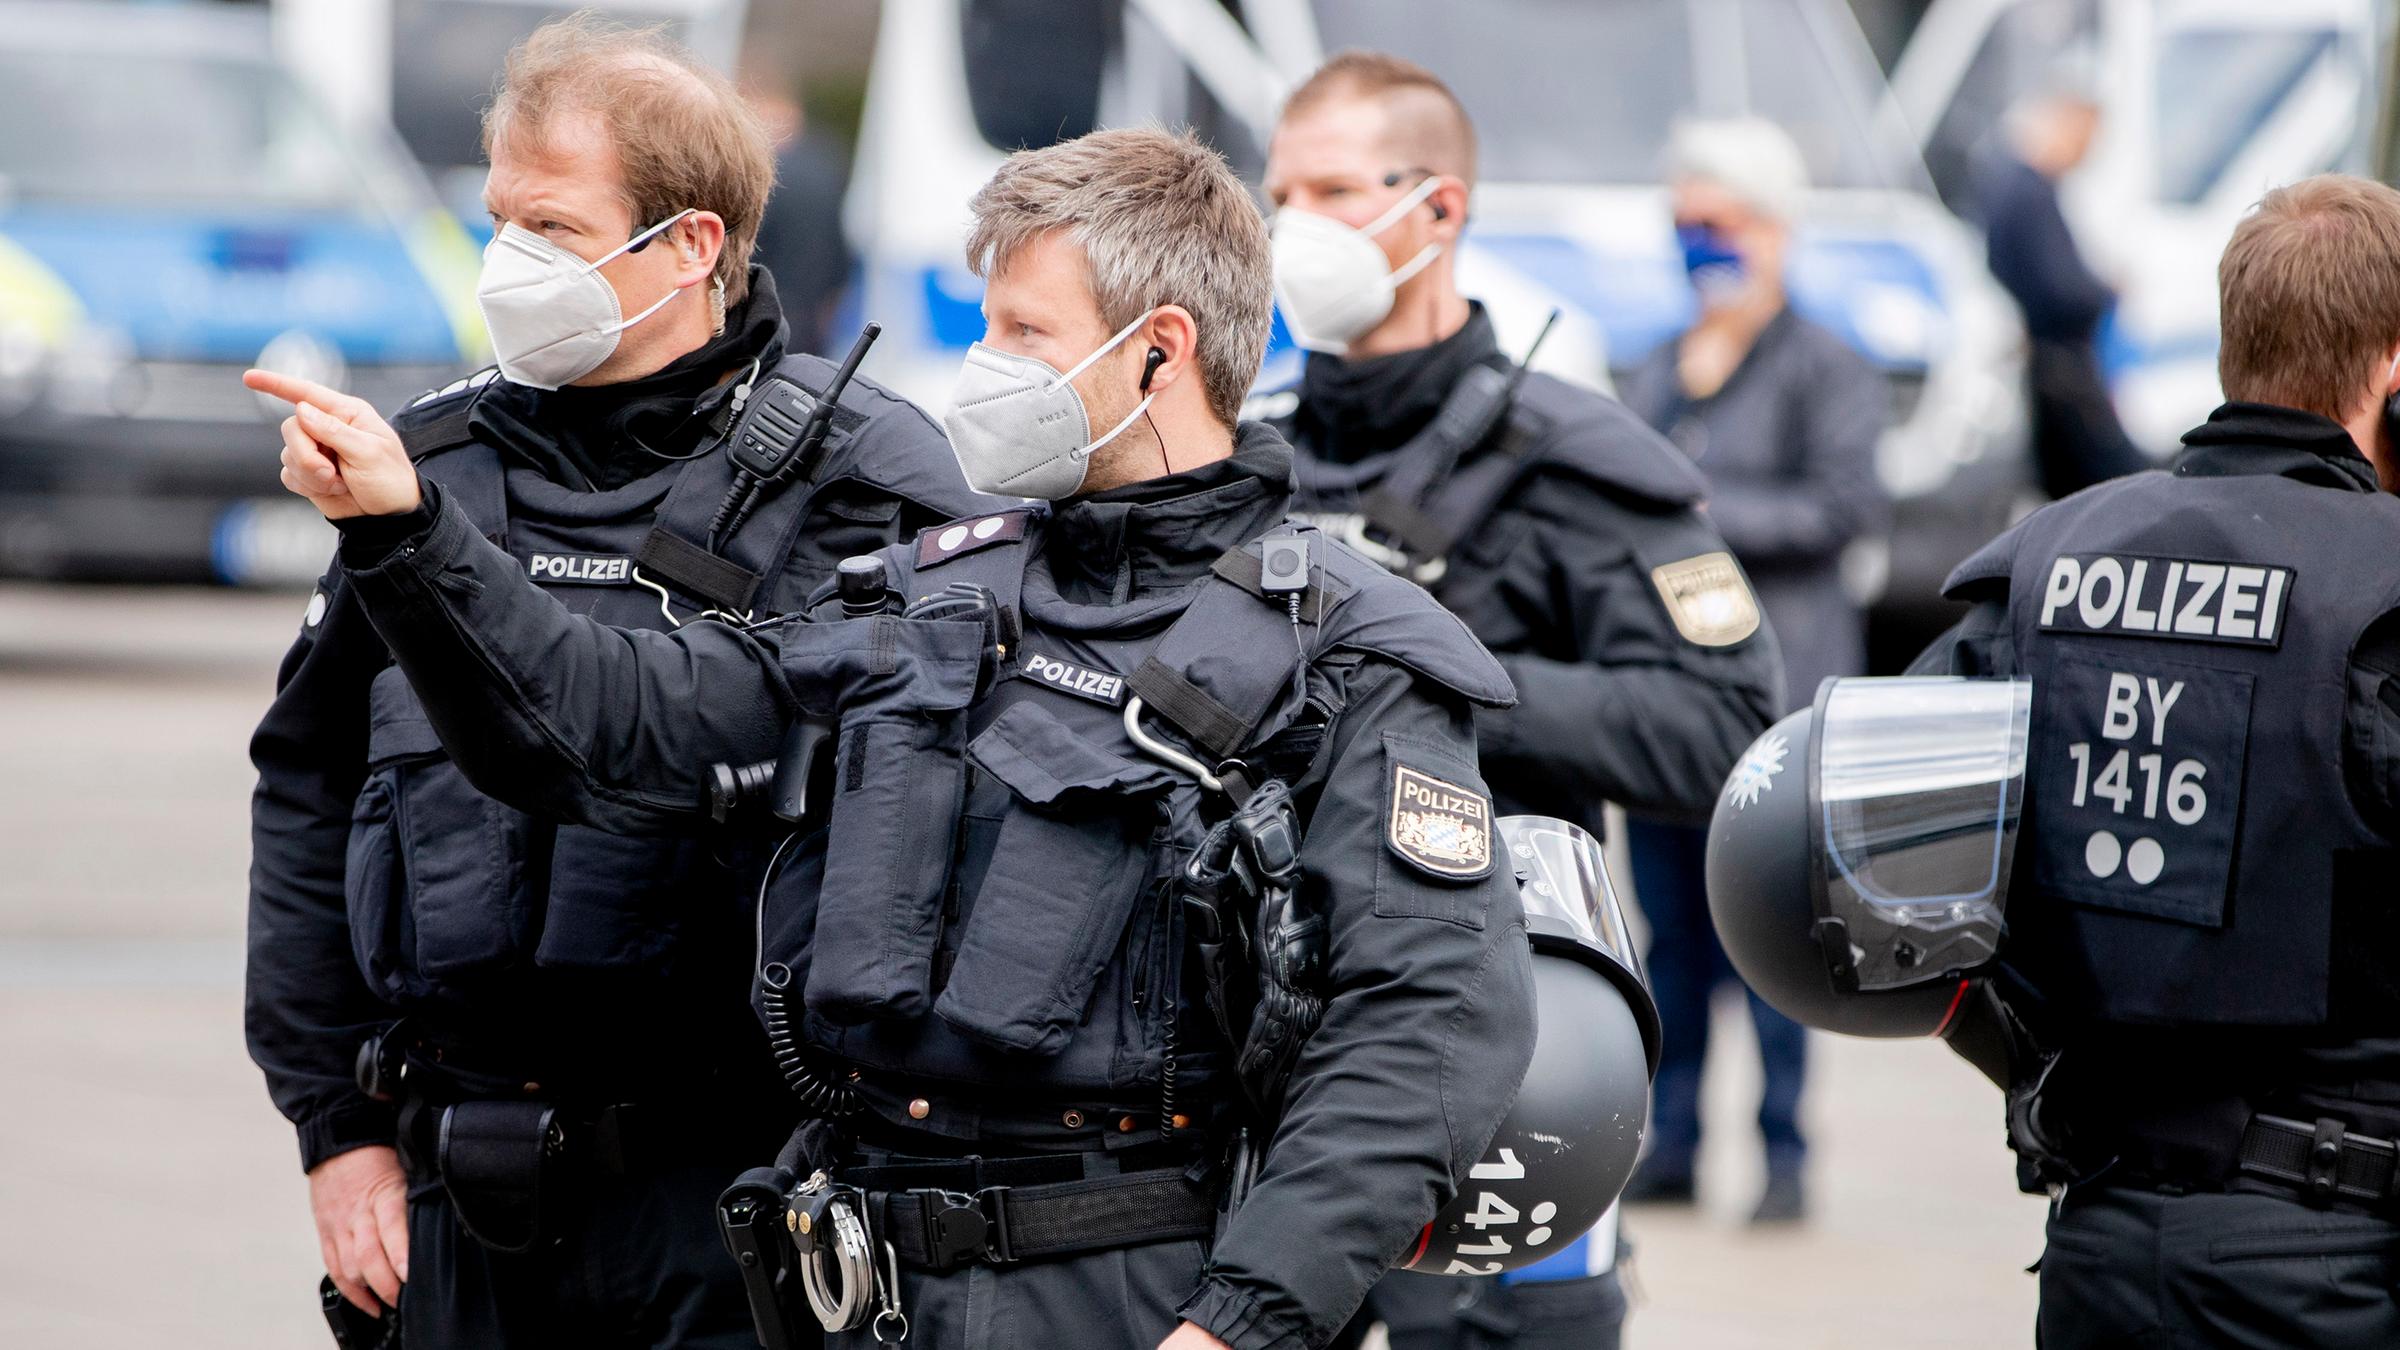 Counter terrorism - German national gets 10-year sentence